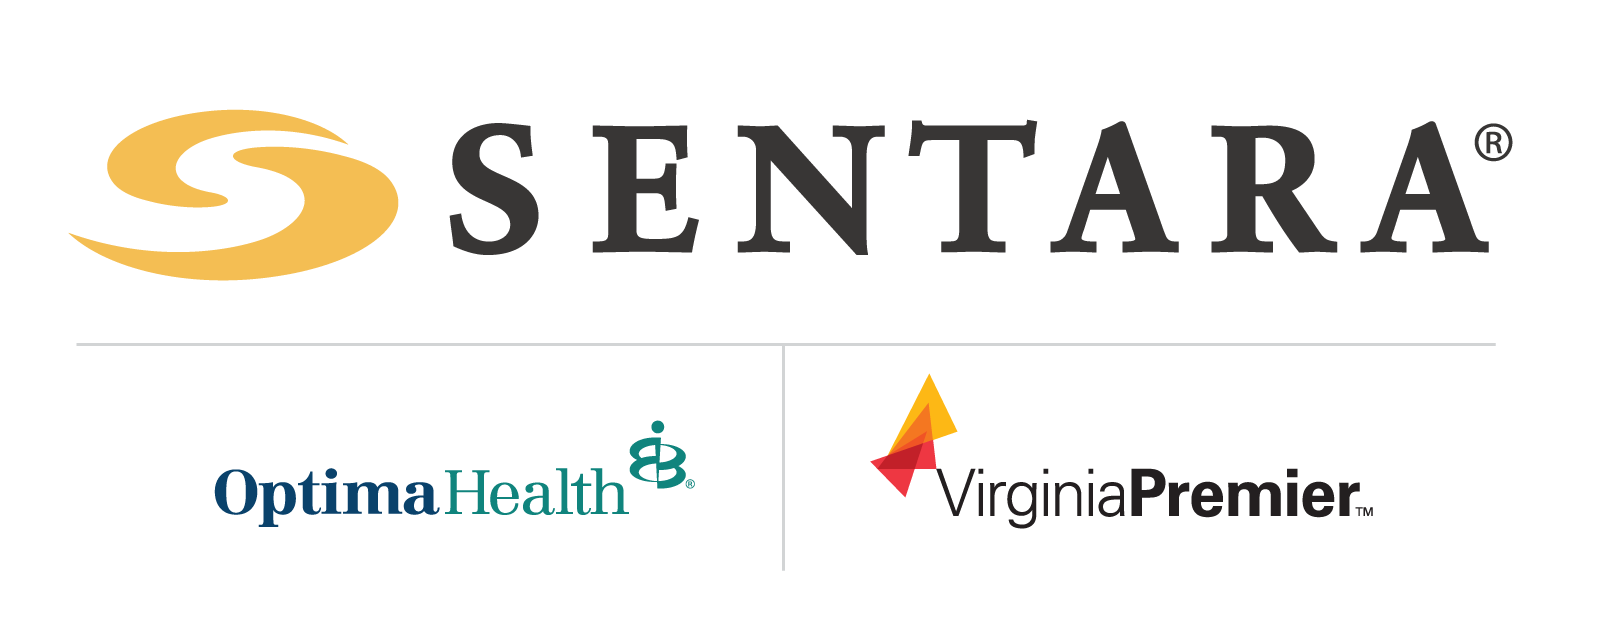 Sentara Healthcare (Statewide)